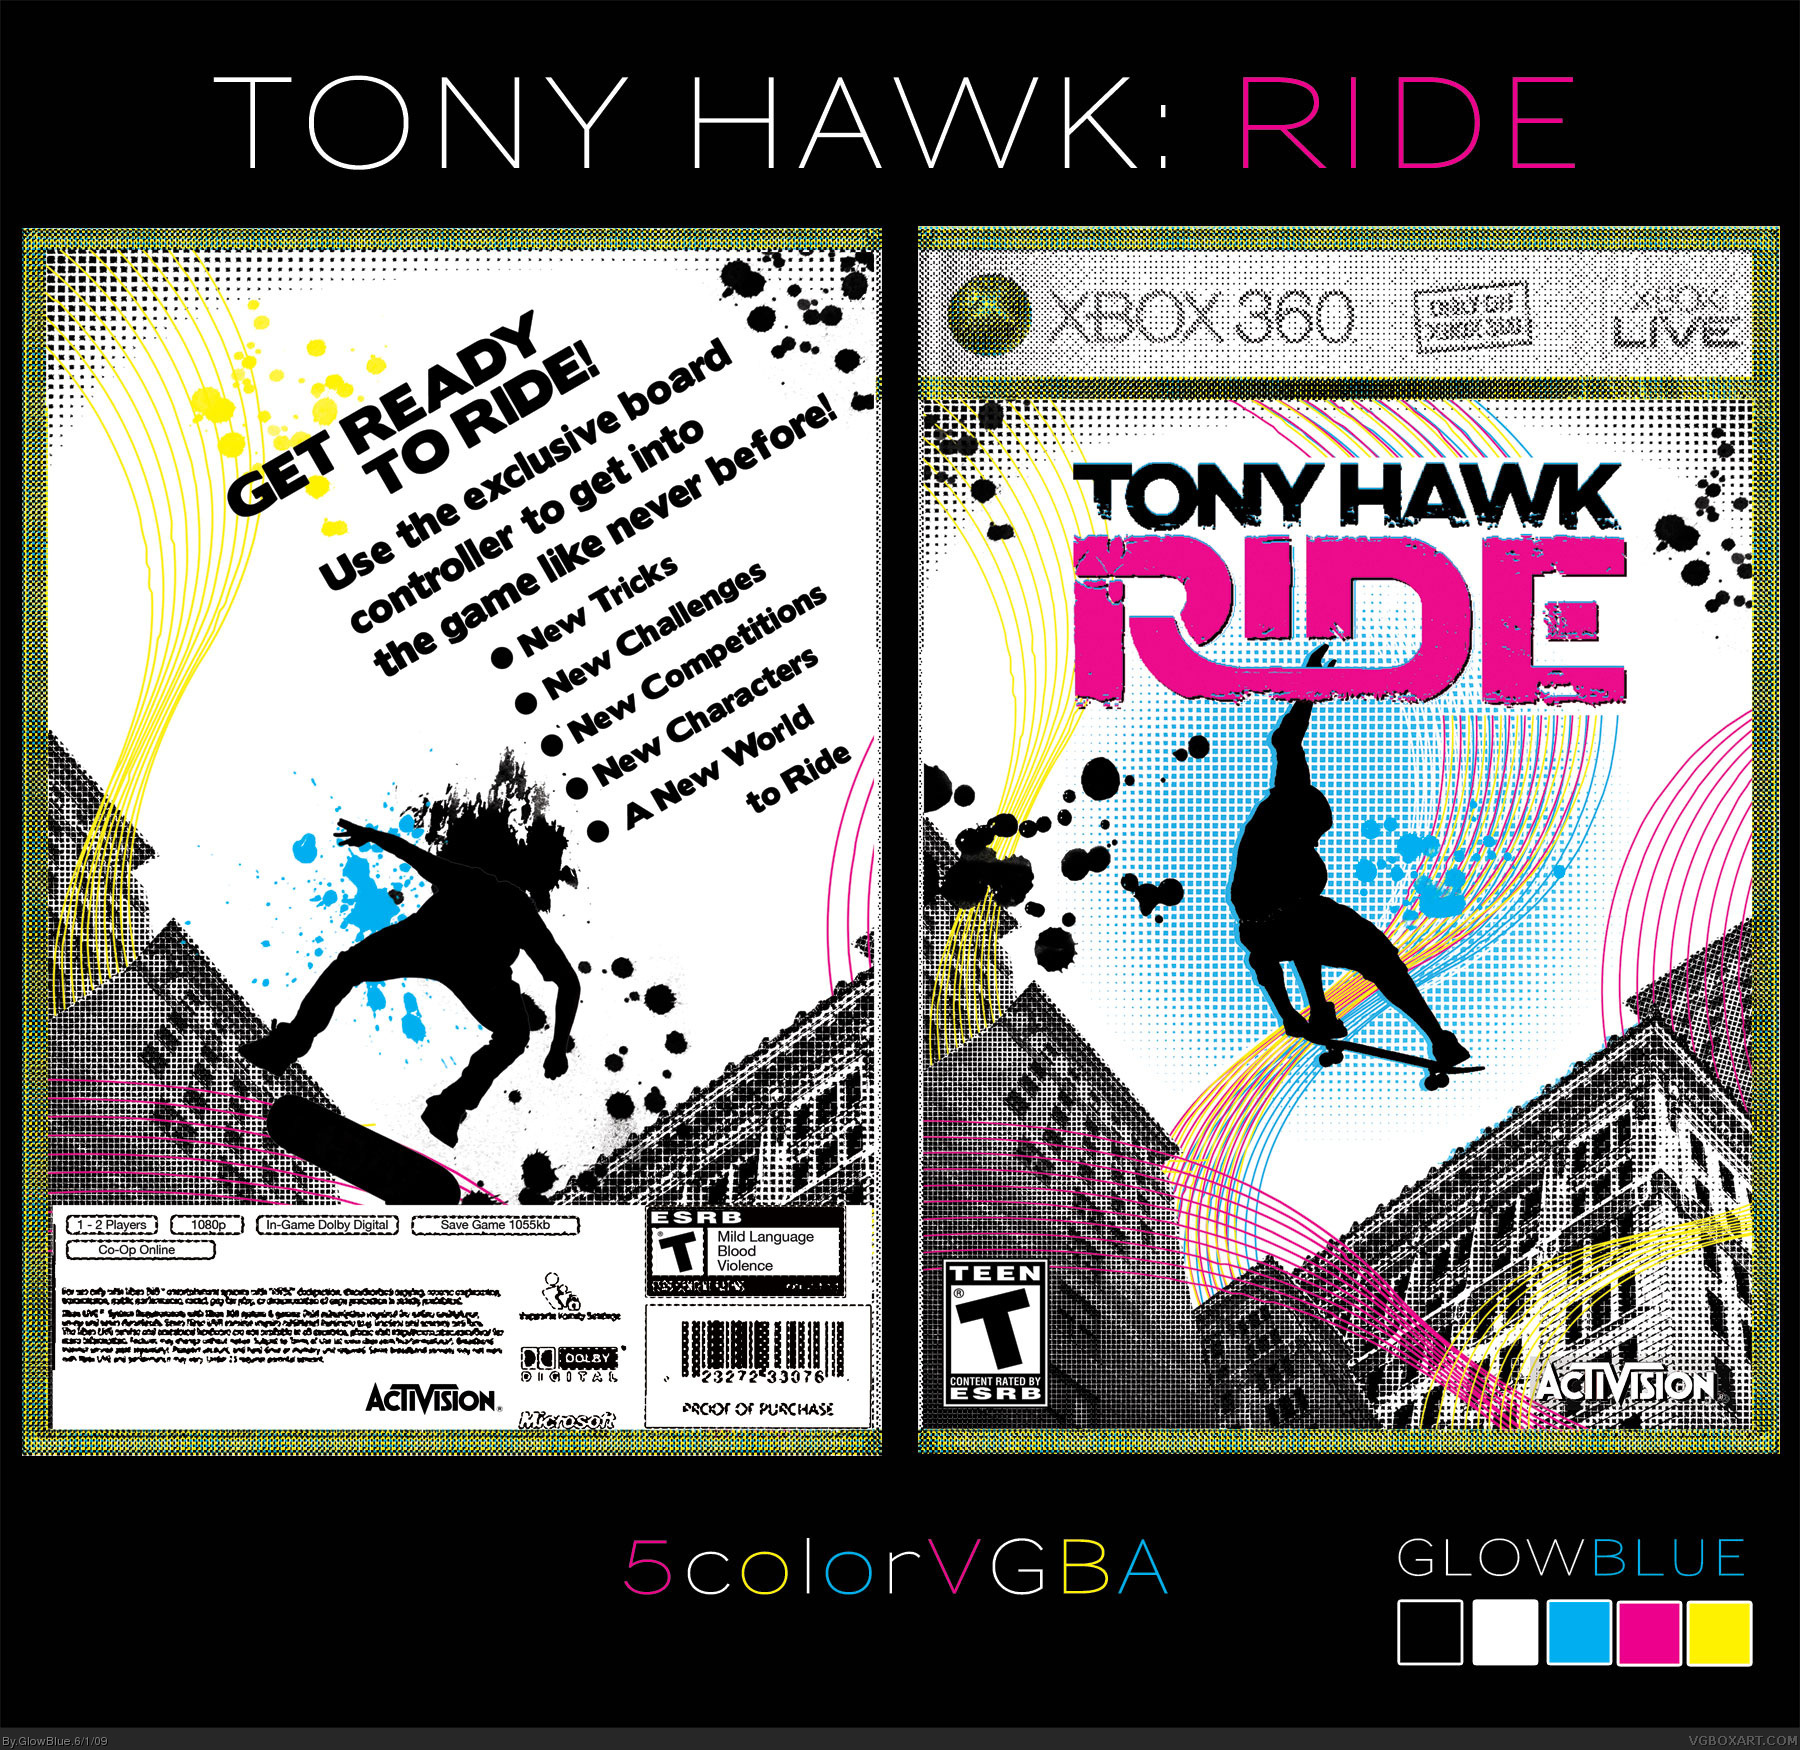 Tony Hawk: RIDE box cover